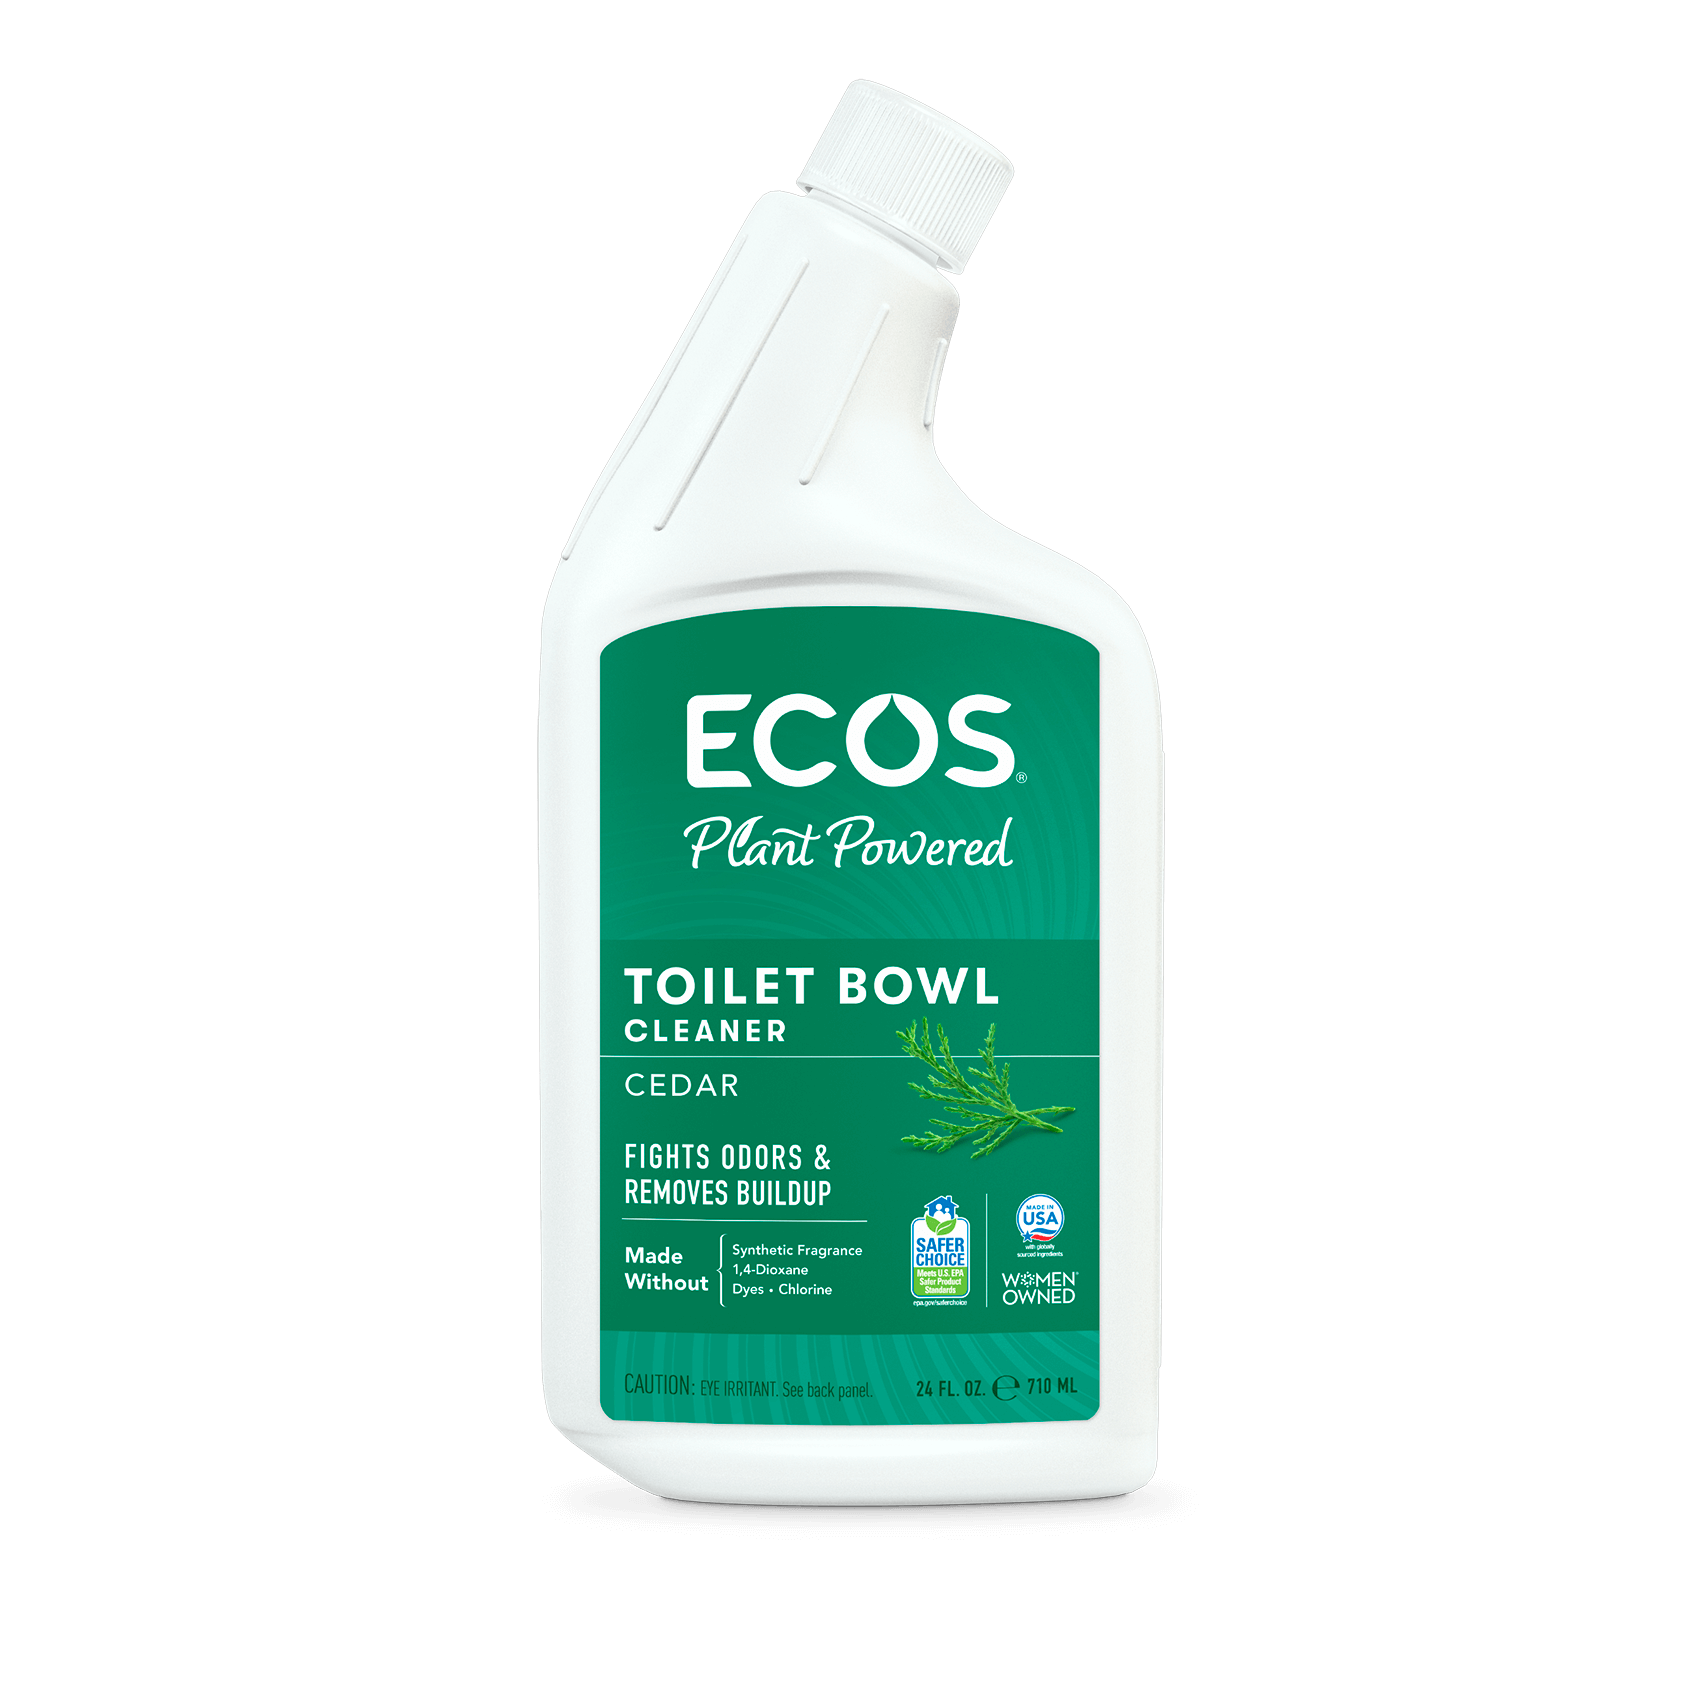 Eco-friendly 24oz USA Recycled PET Bottle